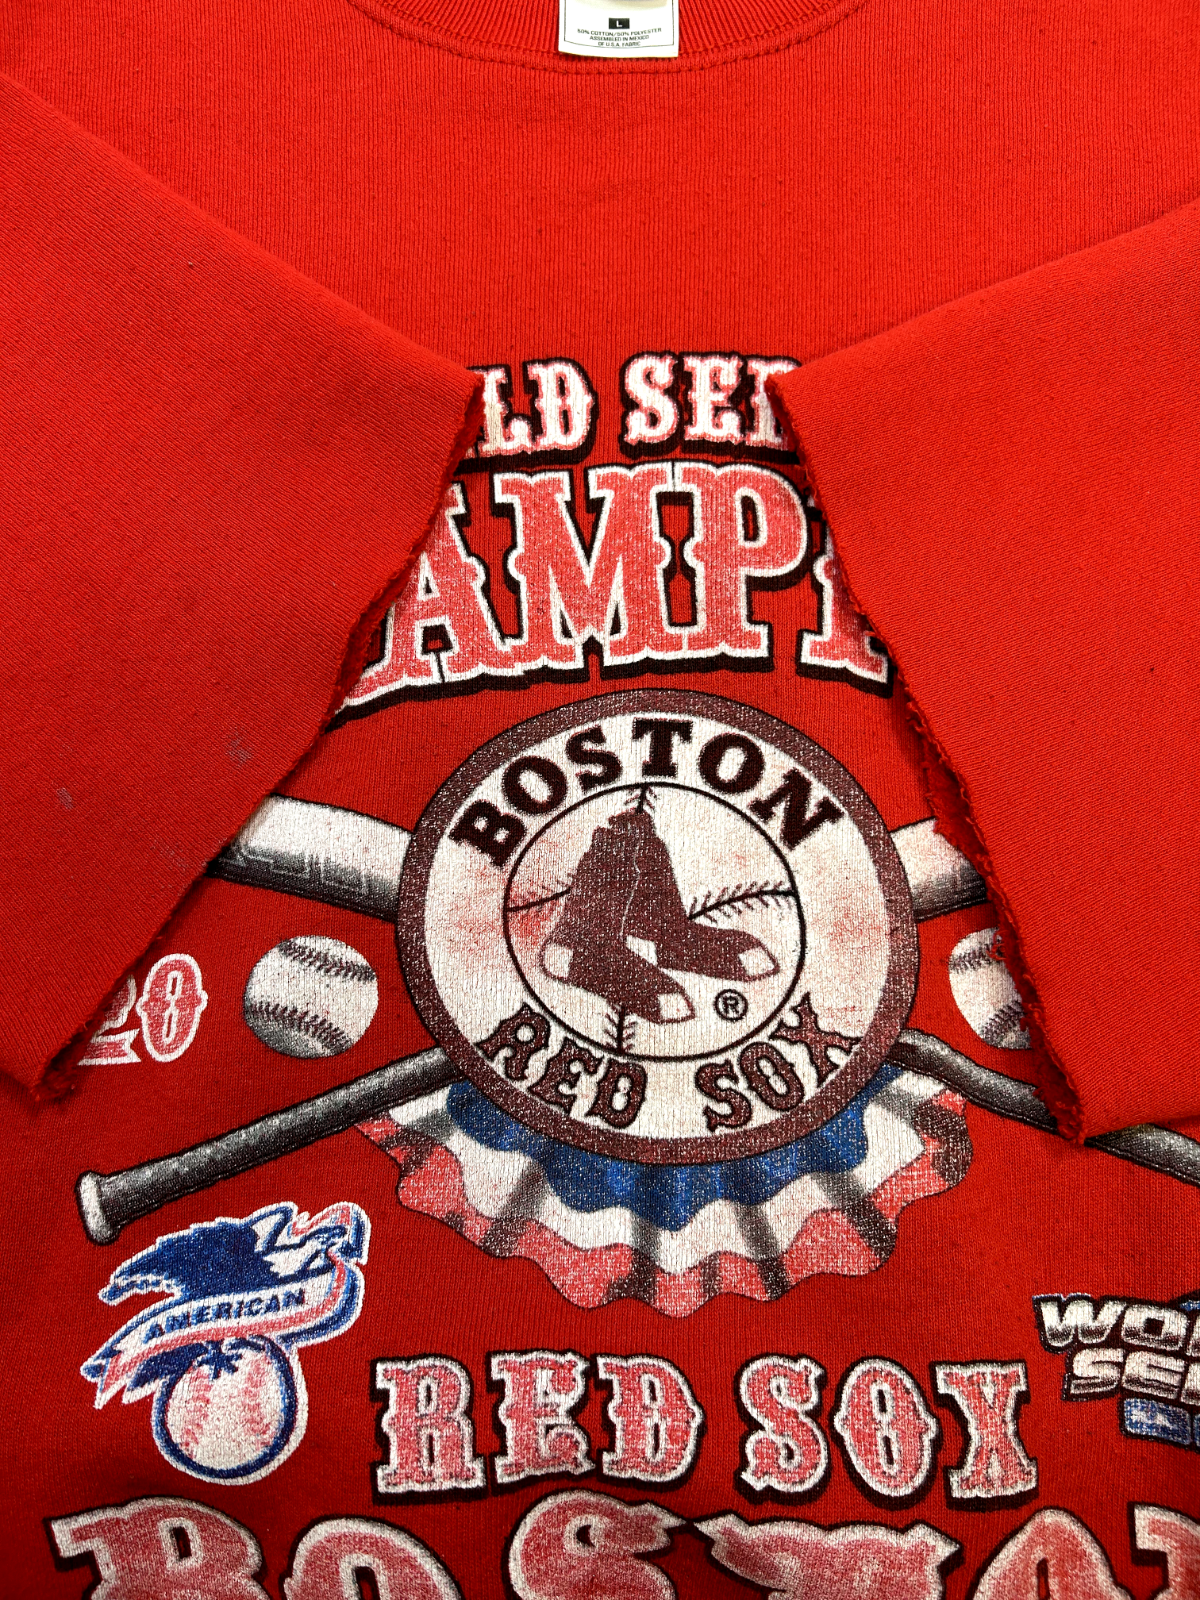 Vintage 2004 Boston Red Sox World Series Champs MLB Graphic Sweatshirt Sz Large